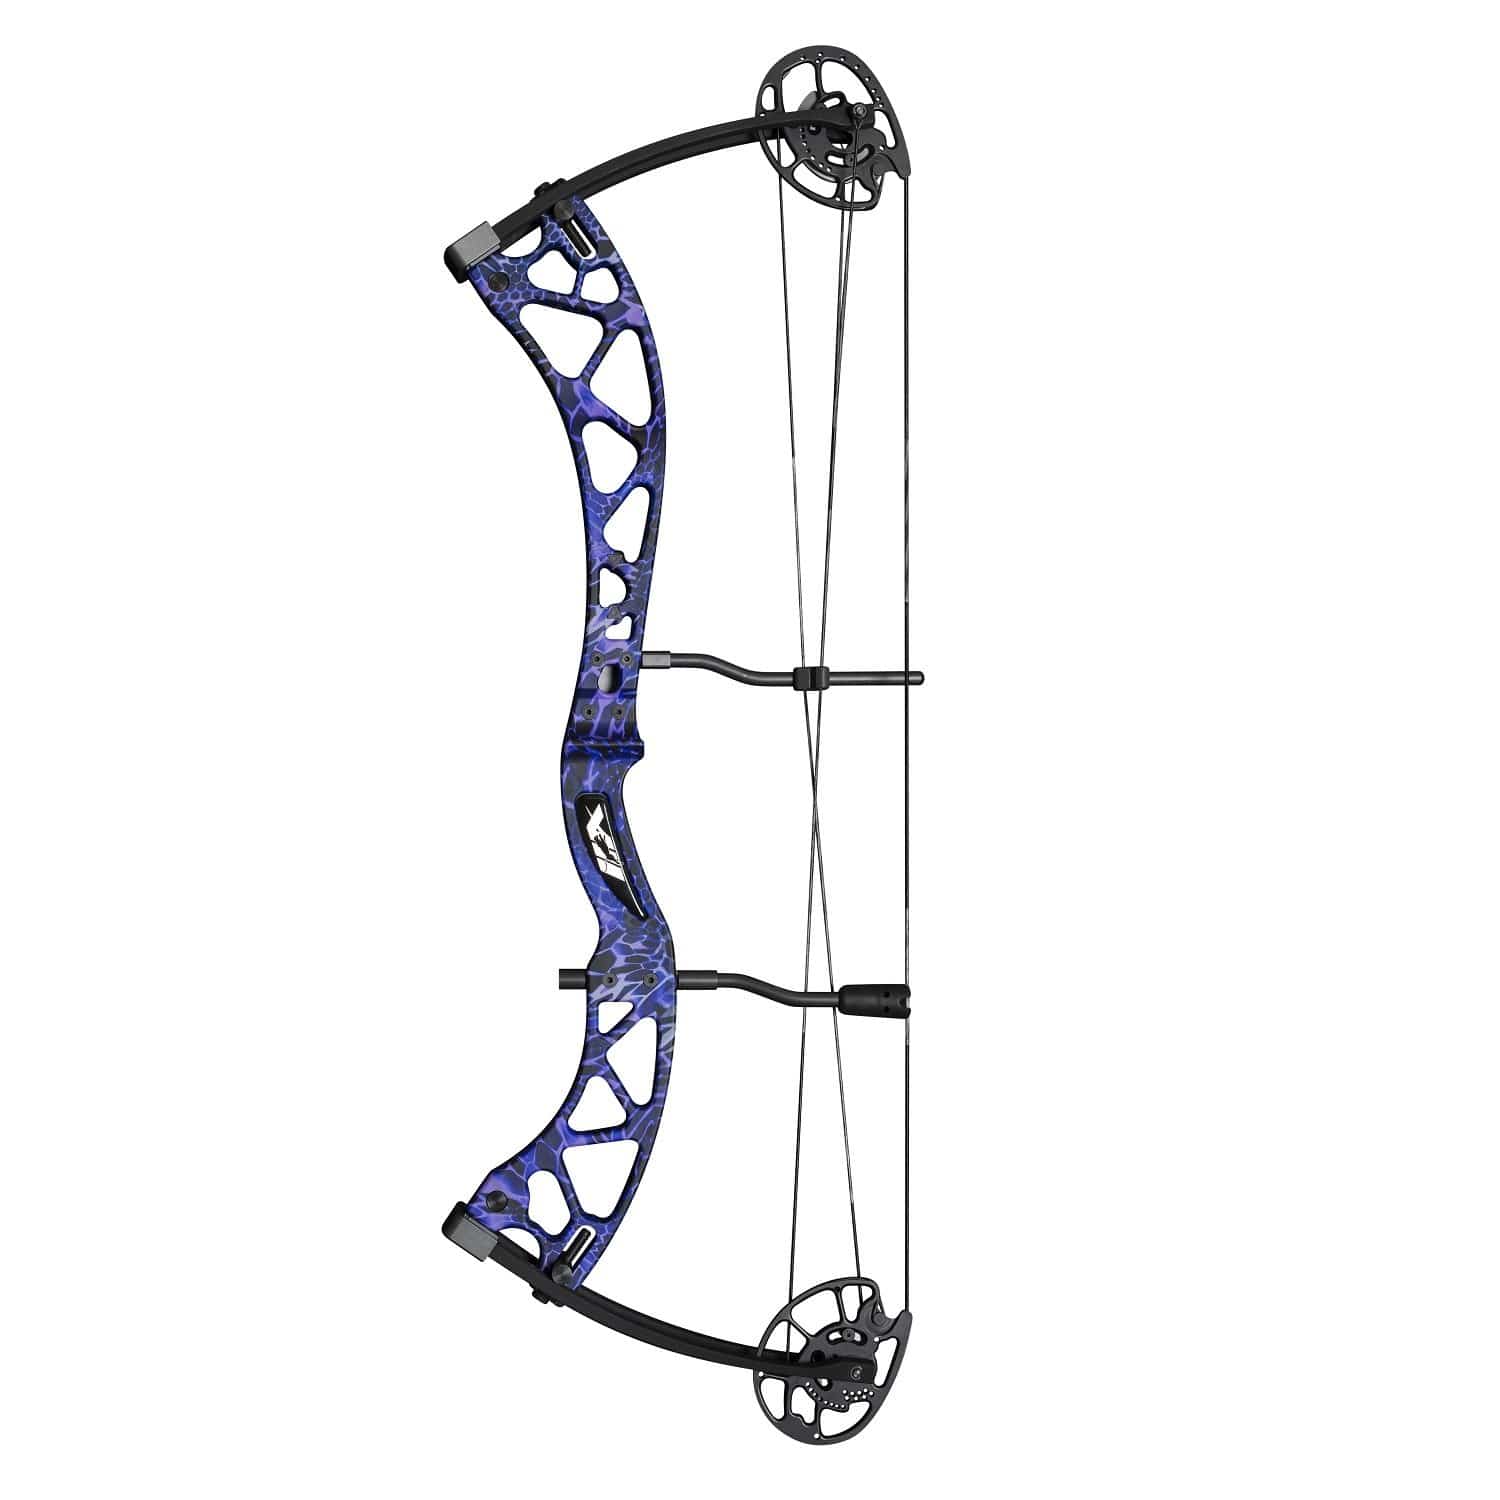 Martin Archery Archery : Compound Bow Martin Archery Carbon Mist Compound Bow RH Pkg 50lb Purple